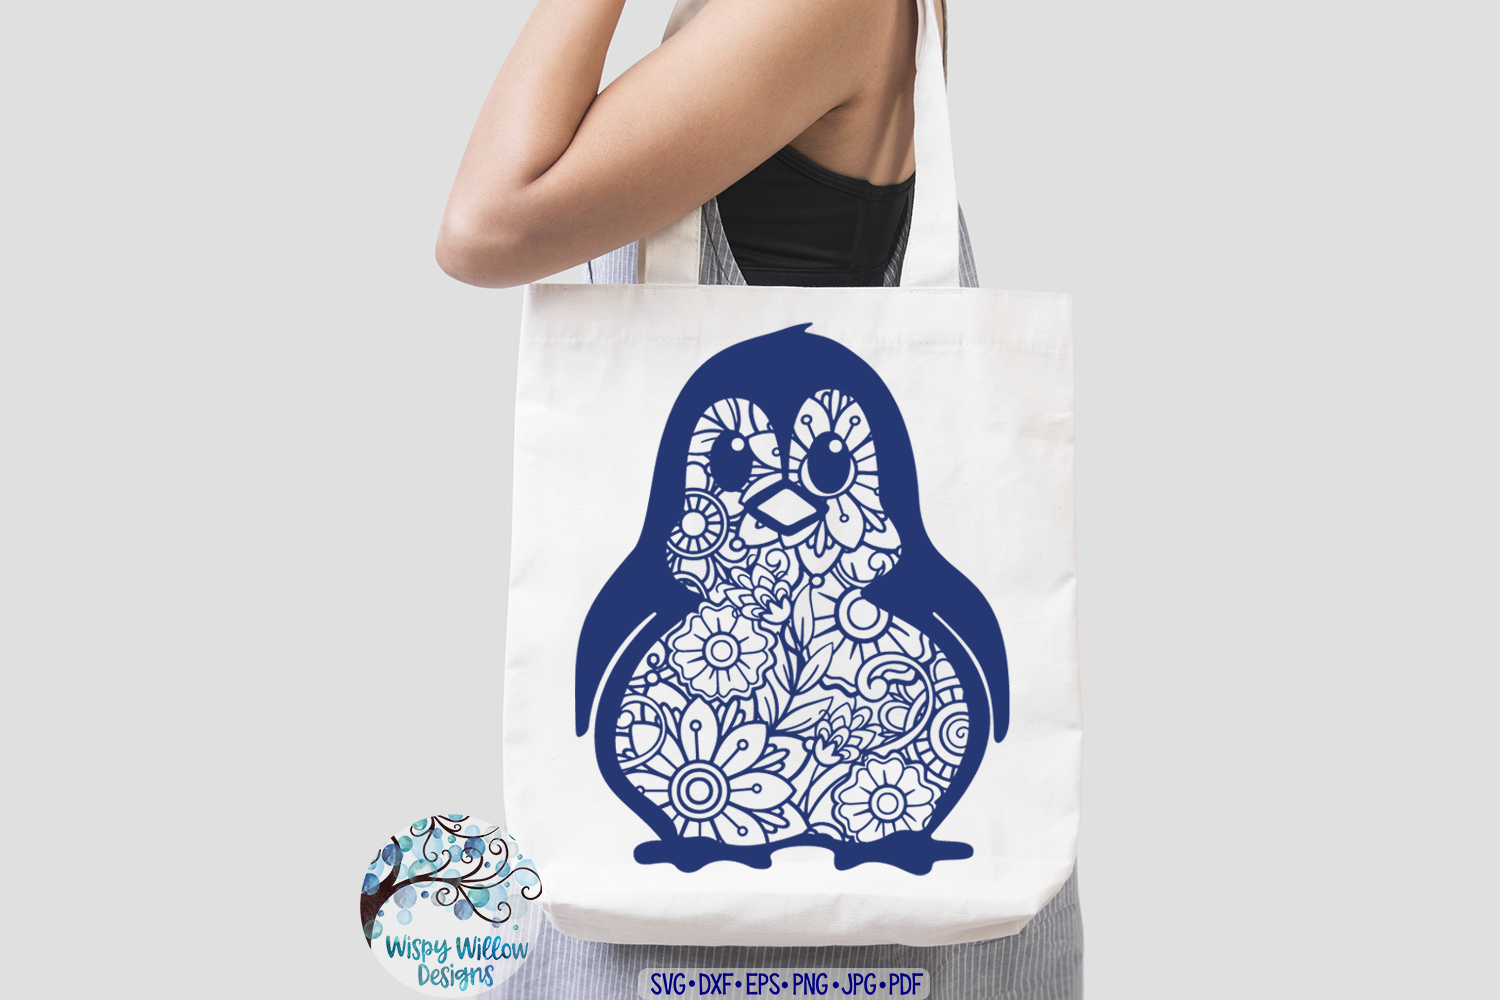 Download Penguin Zentangle Svg Cut File Animal Mandala By Wispy Willow Designs Thehungryjpeg Com